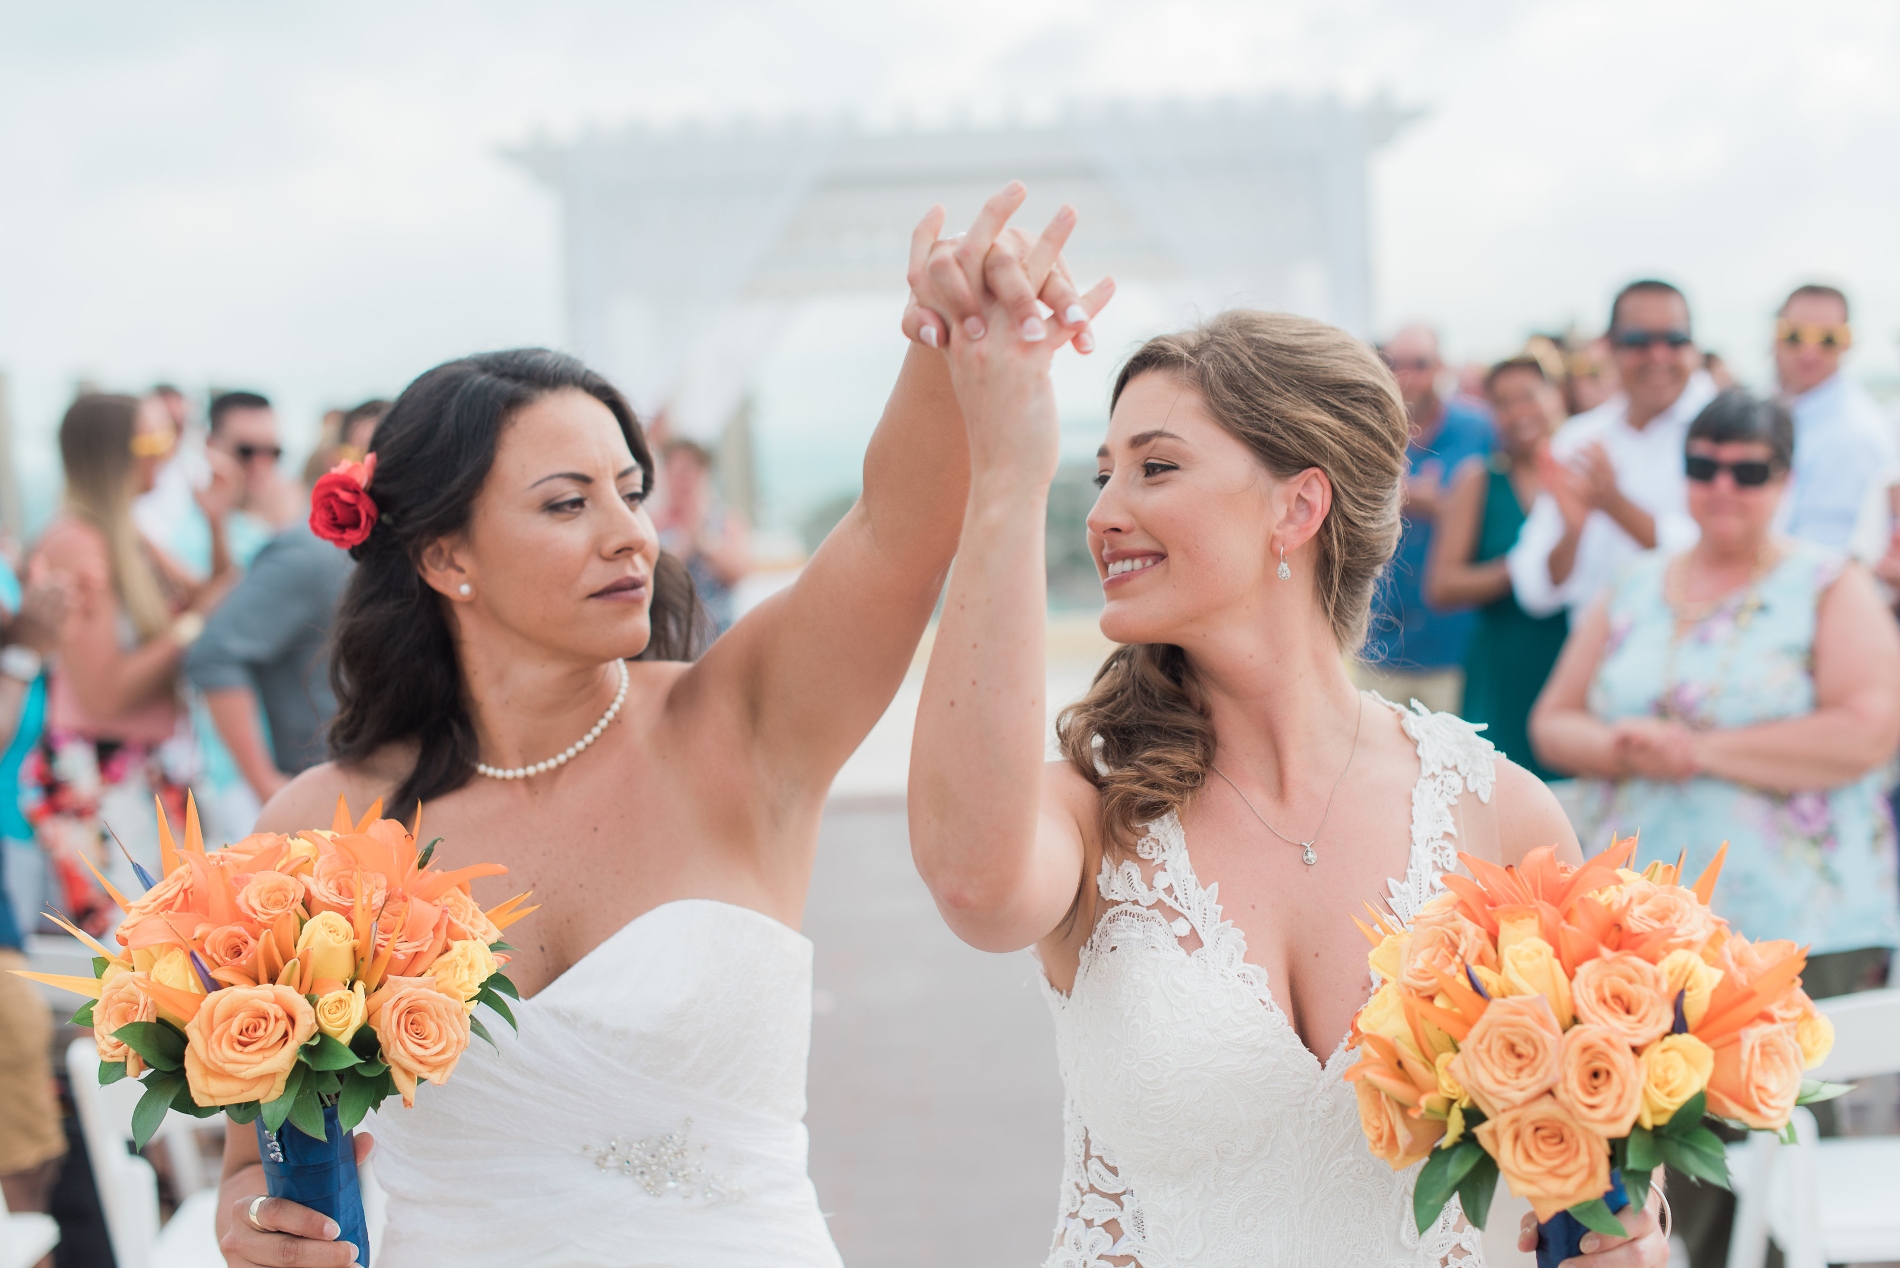 How To Choose An LGBT Friendly Wedding Destination